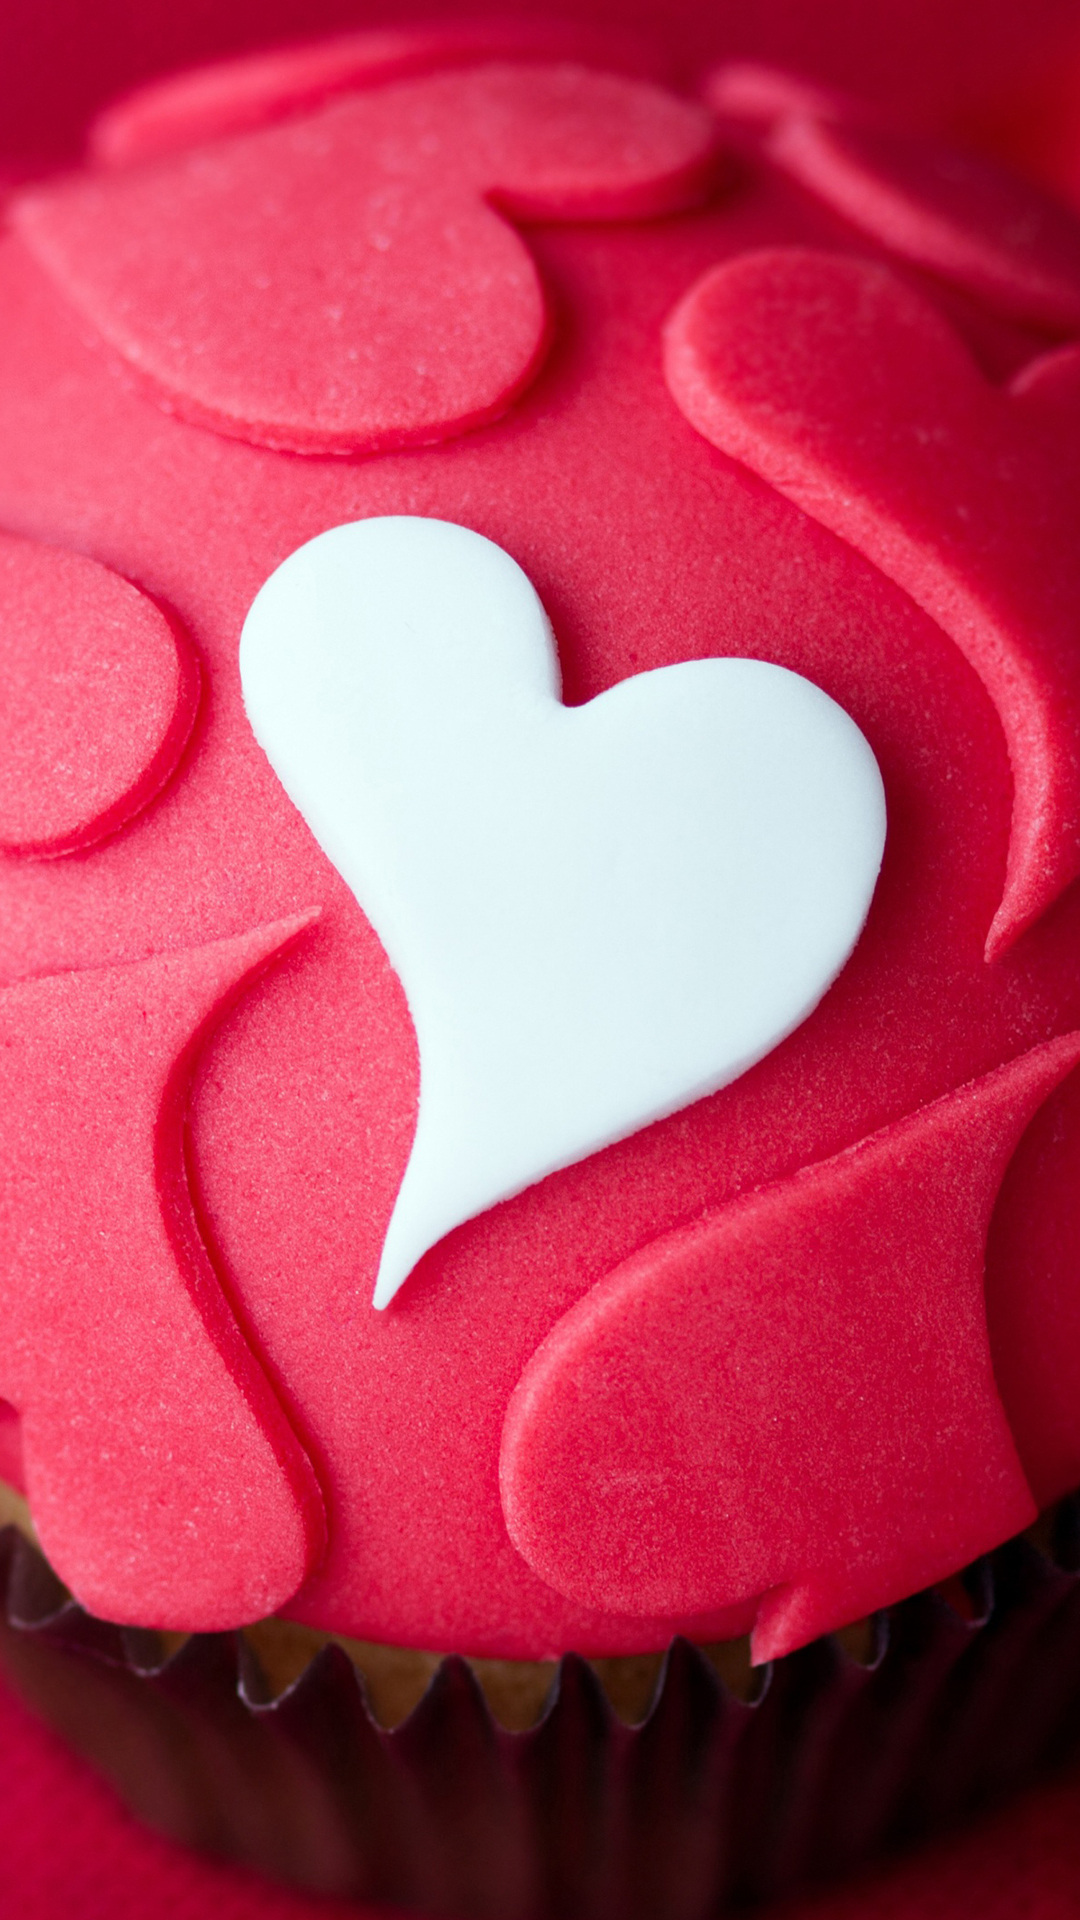 Heart Love Shaped Desert Cake iPhone 8 Wallpaper Free Download